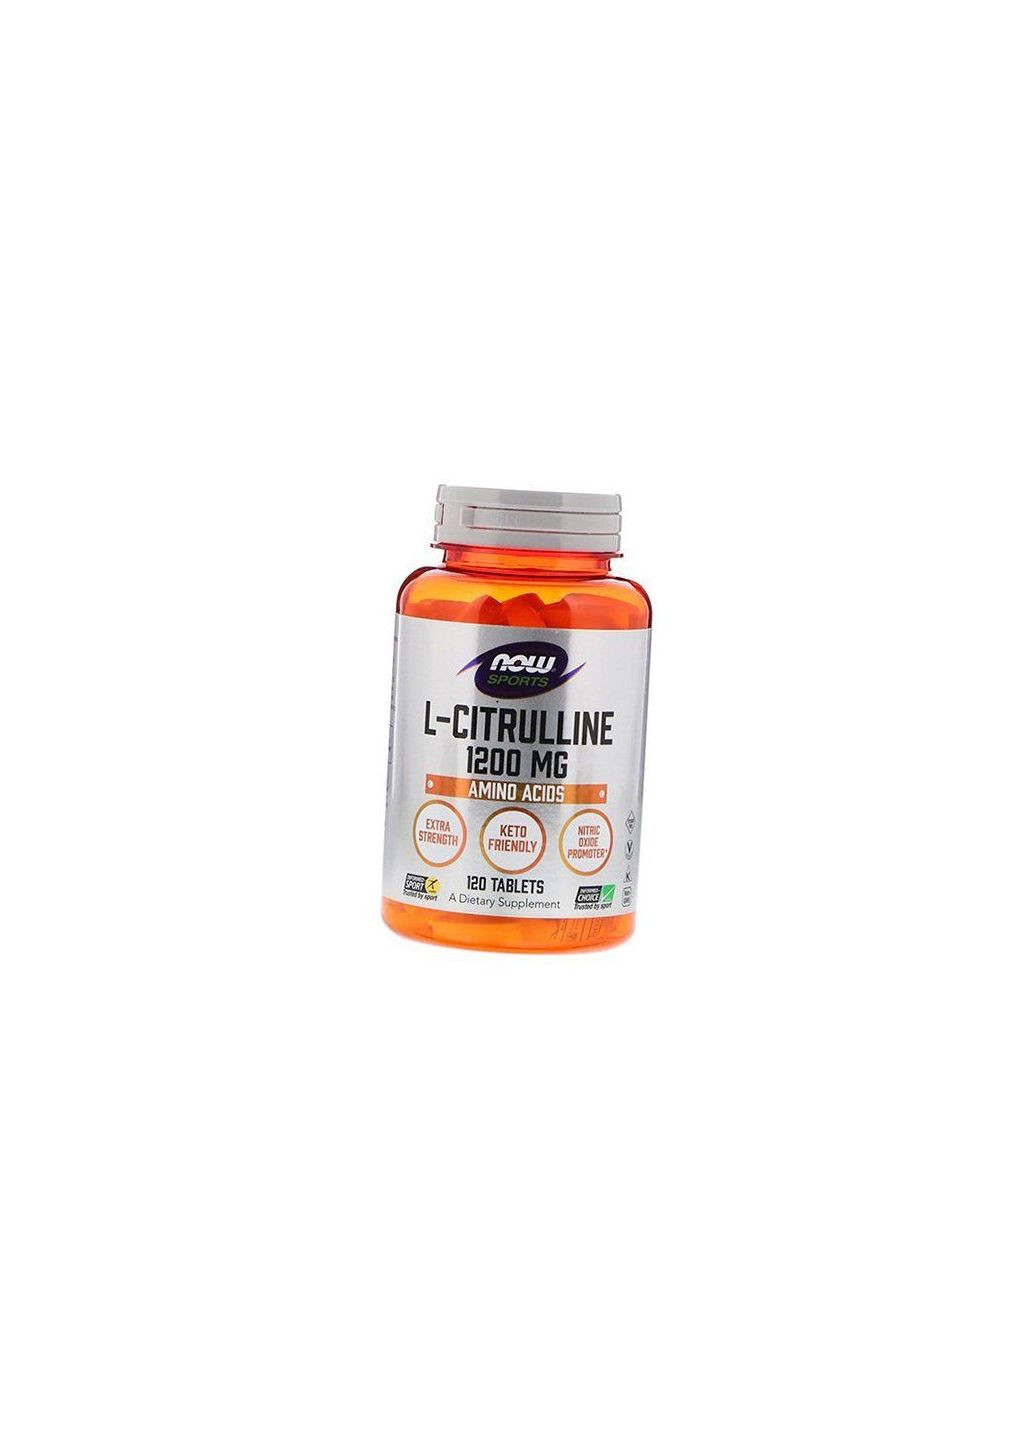 LЦитруллин, дополнительная сила, L-Citrulline 1200, 120таб (27128019) Now Foods (293257090)